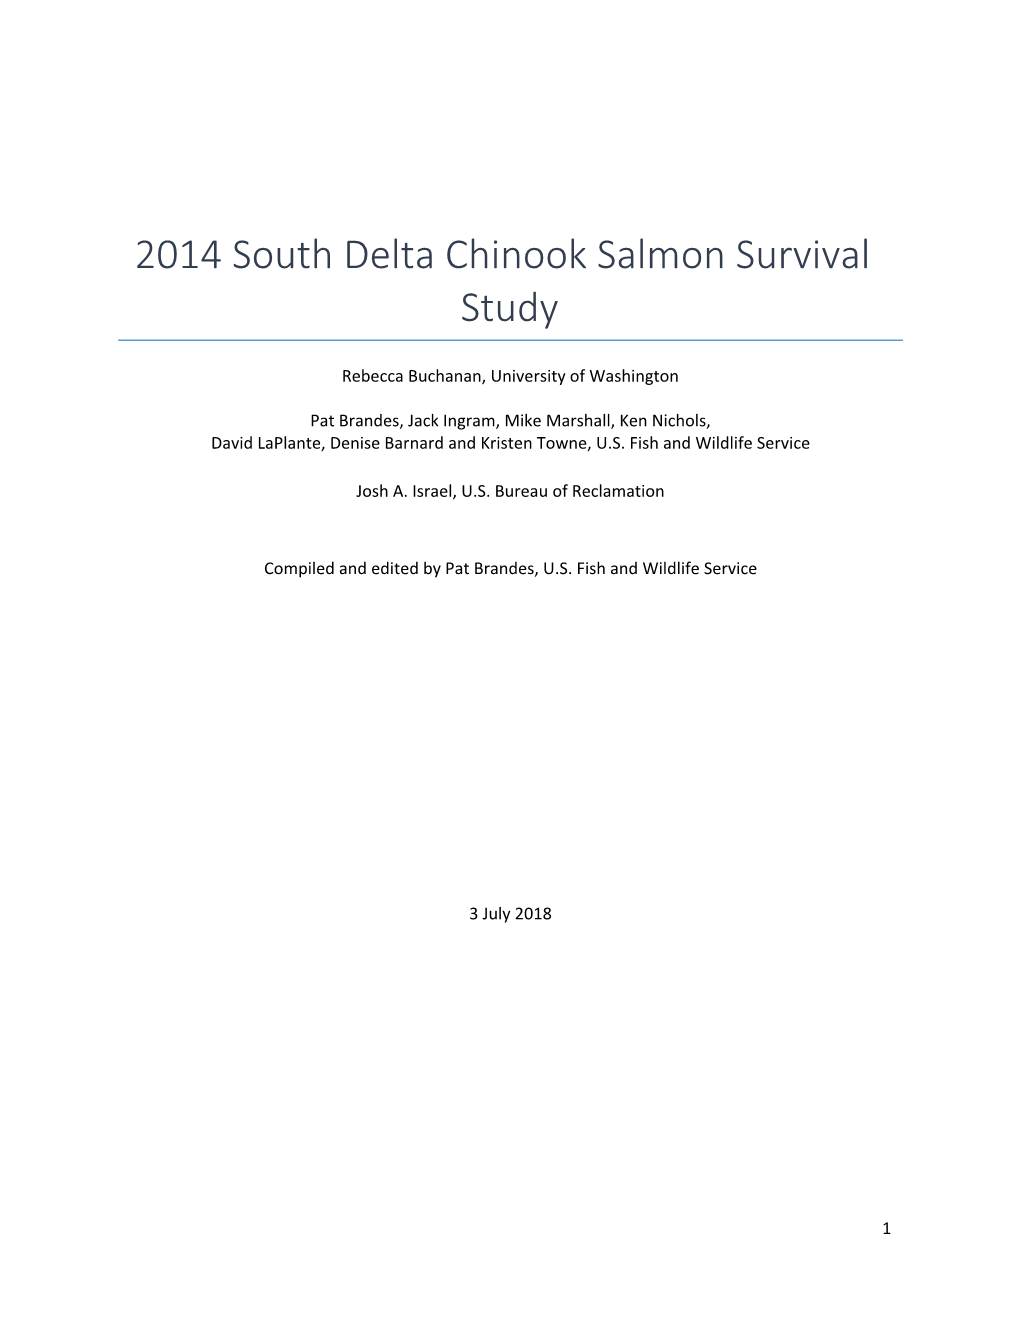 2014 South Delta Chinook Salmon Survival Study